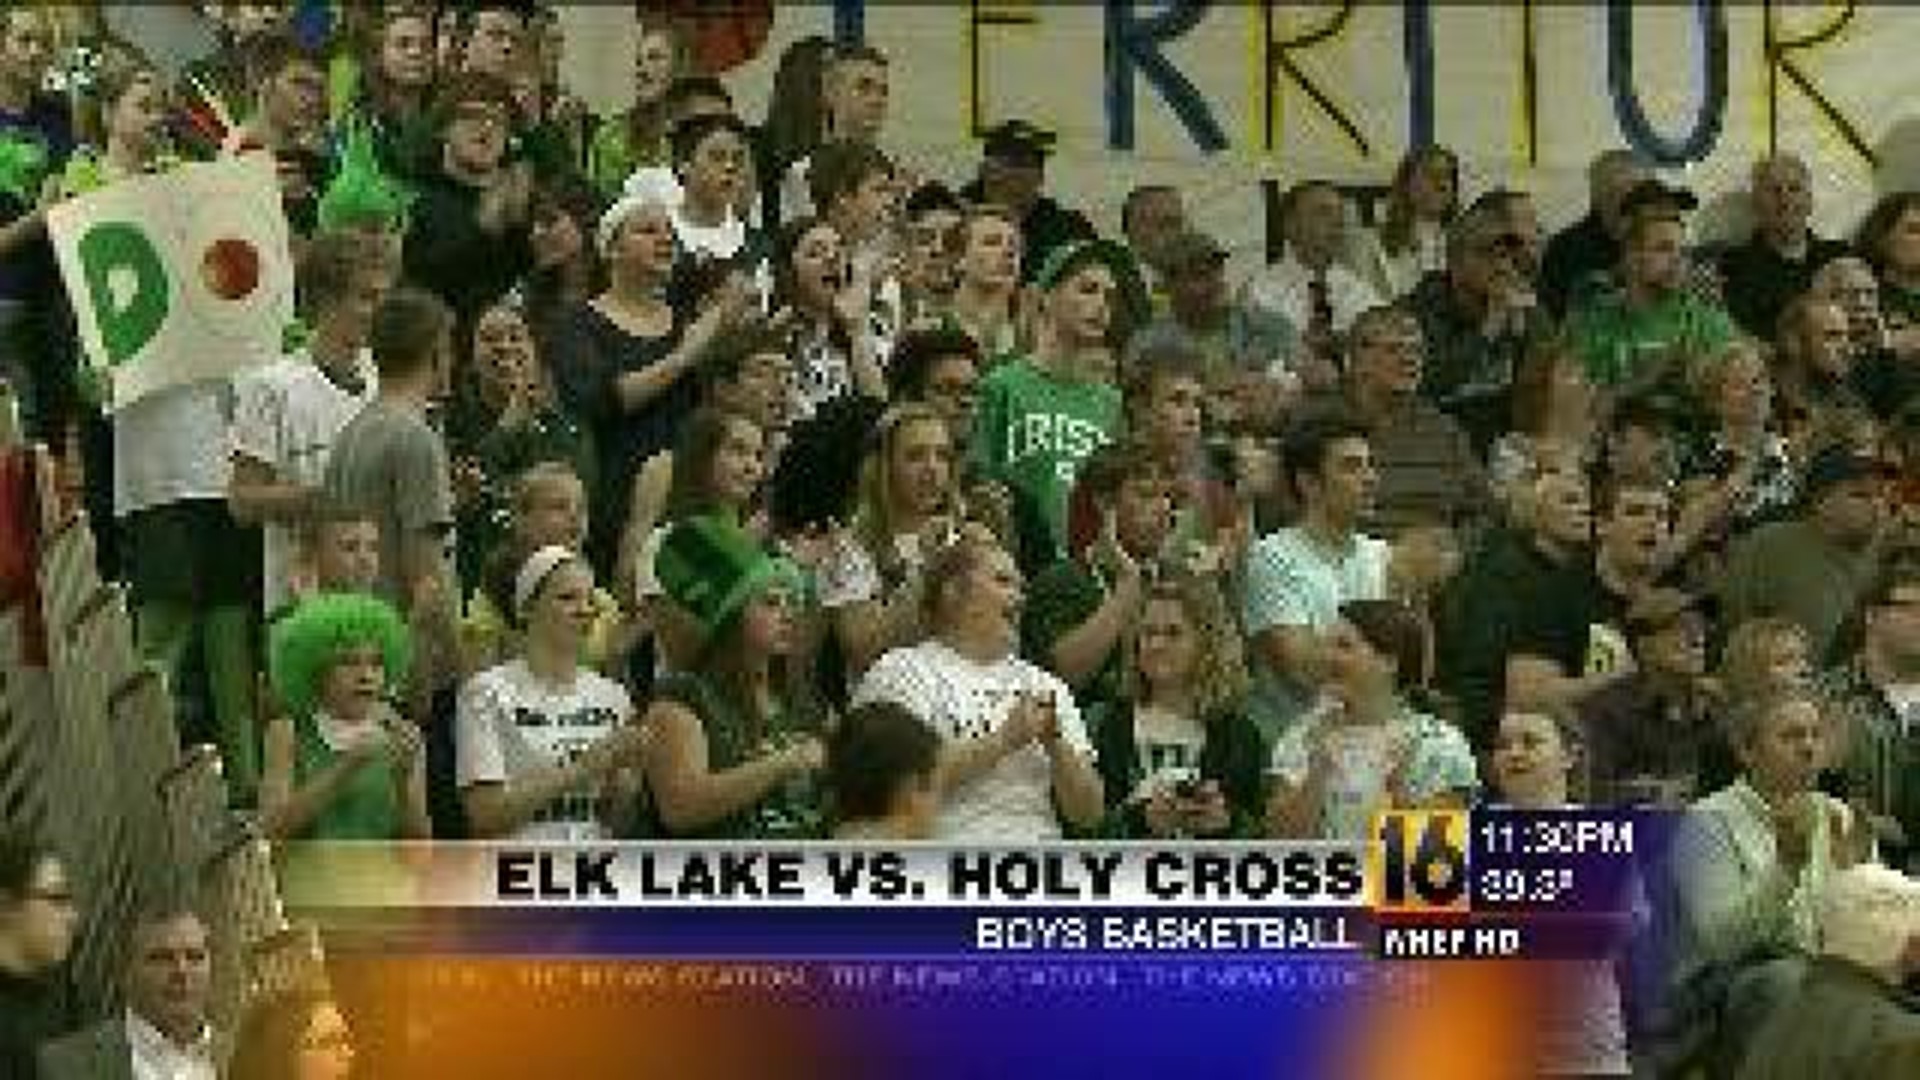 #6 Holy Cross vs Elk Lake